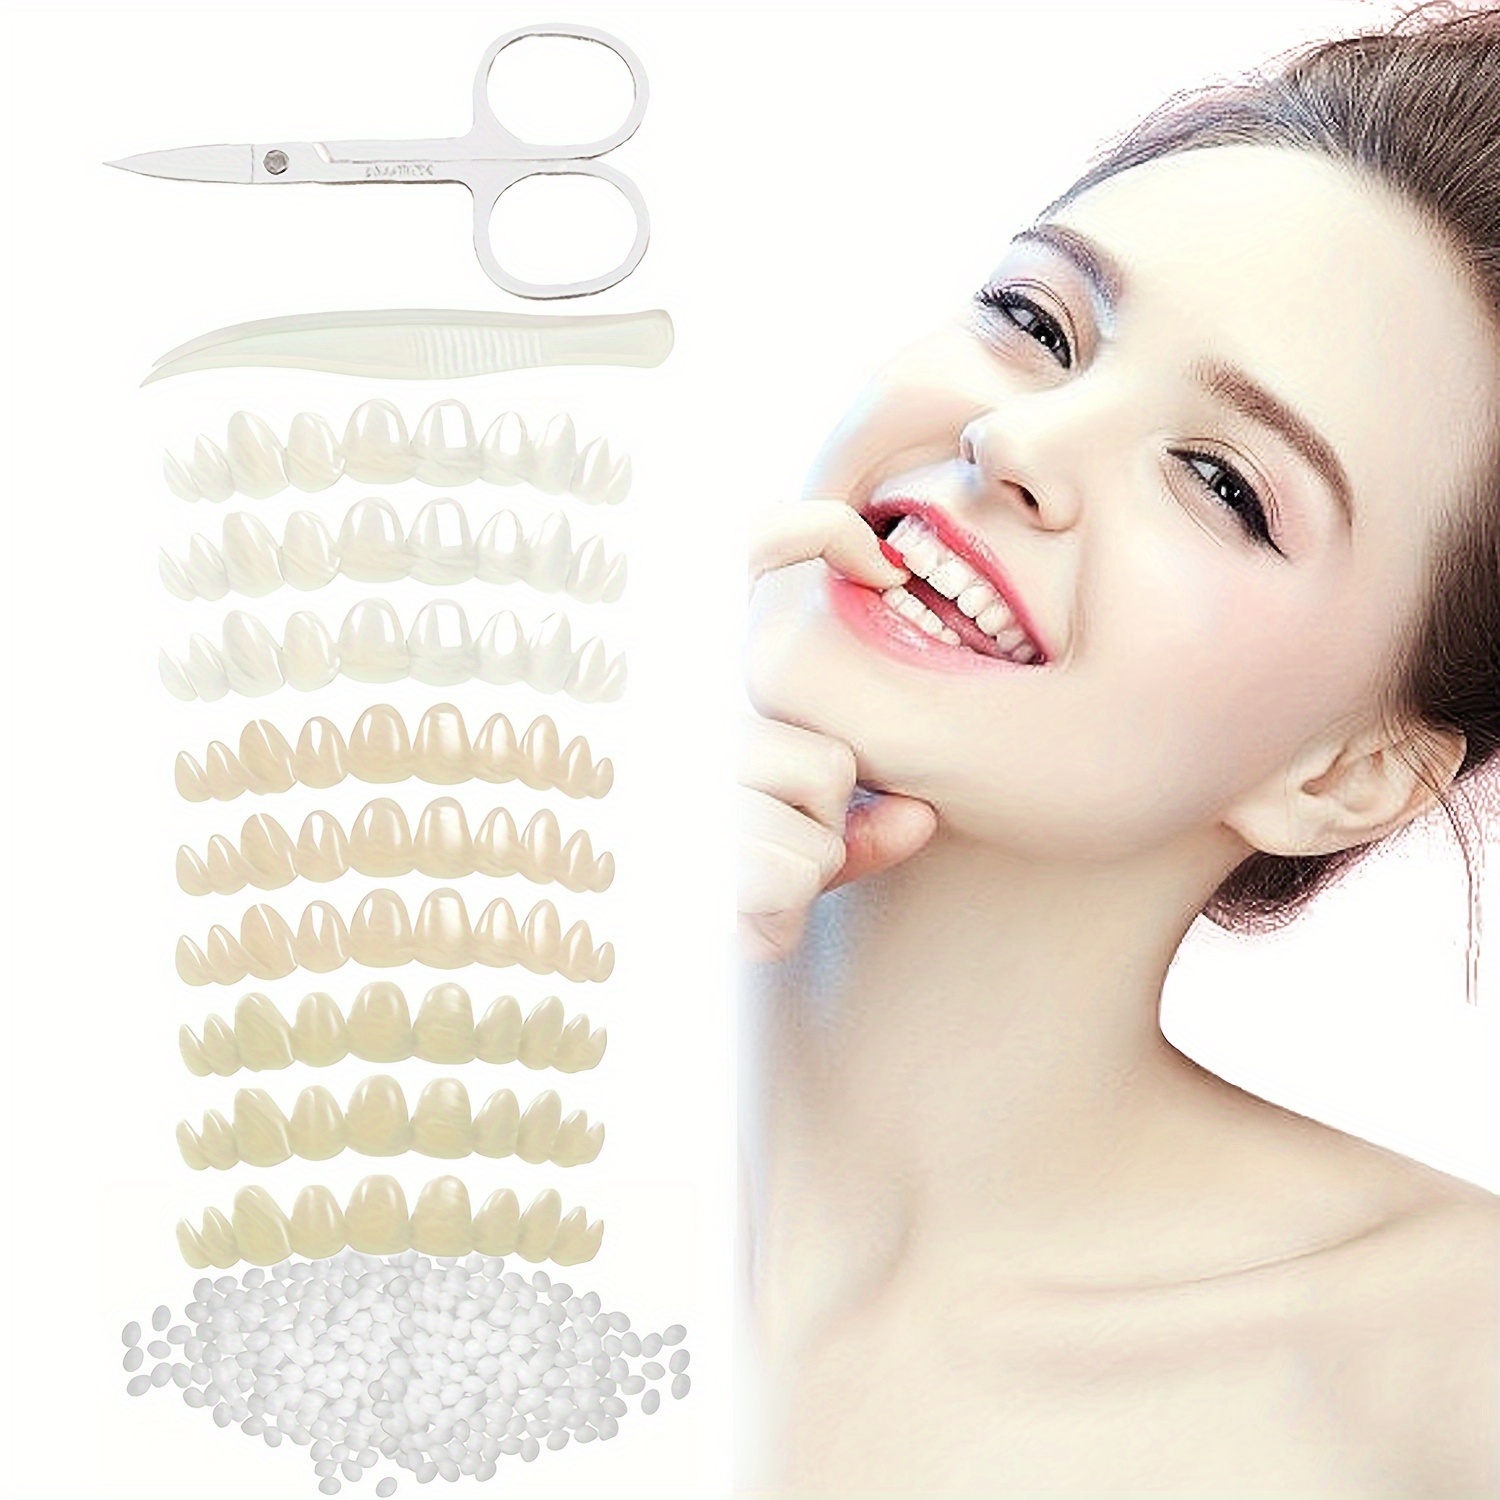 10pcs Shiny Teeth Gem Kit Beauty Teeth Decoration Jewelry For Women Men  Unisex Party Favors